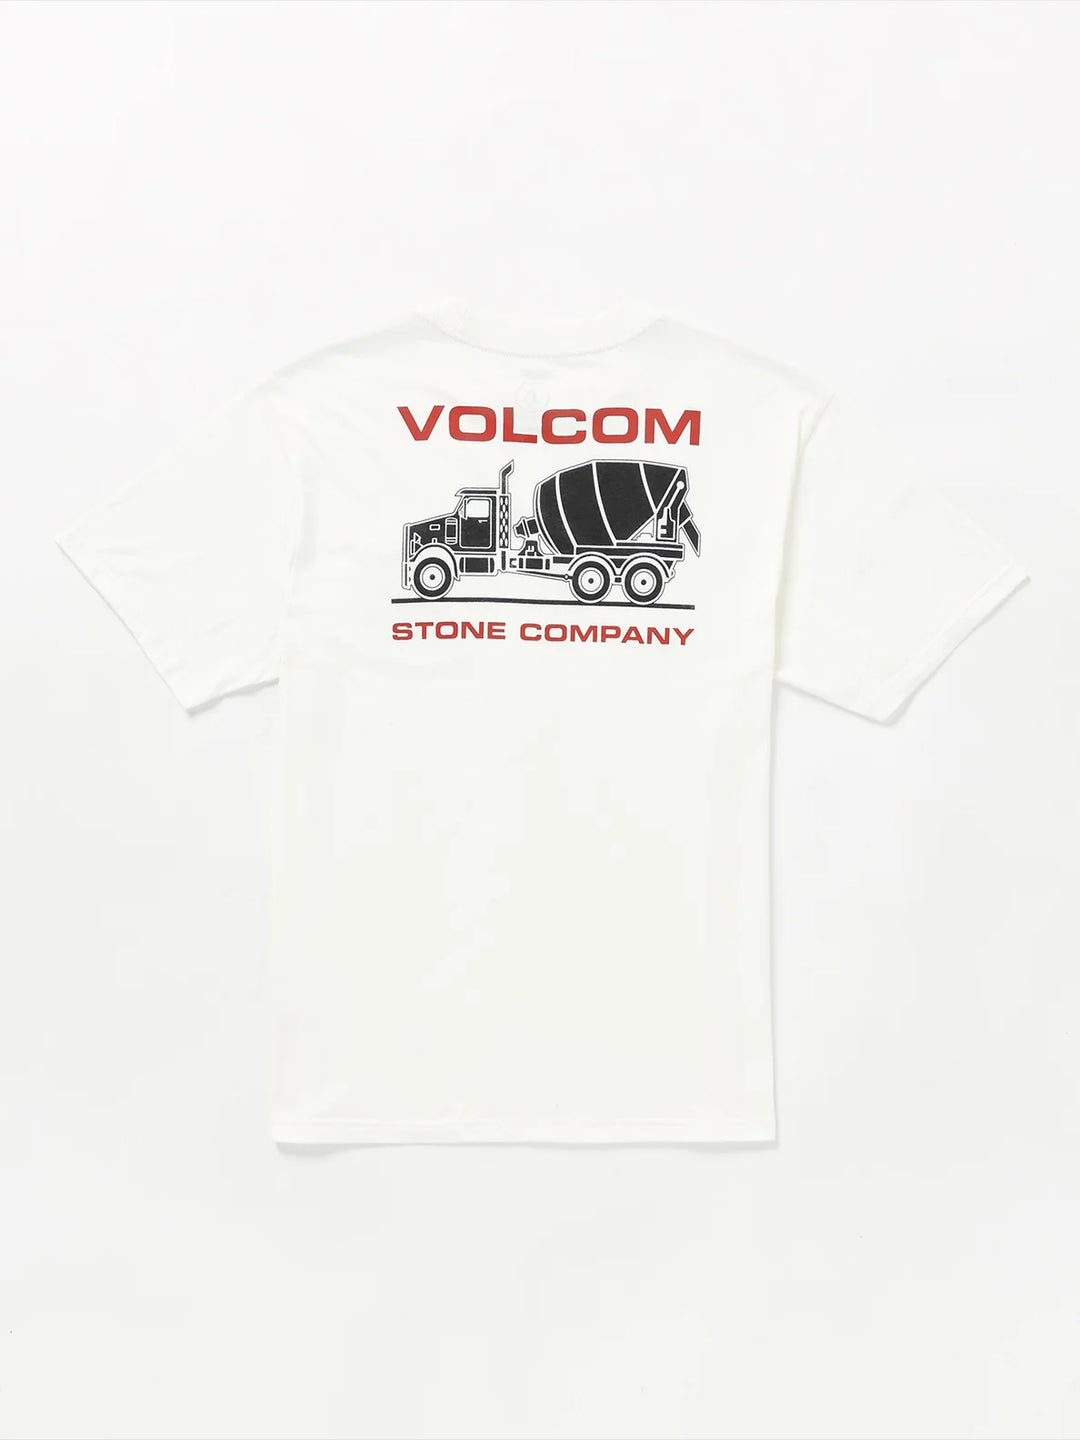 Volcom Skate Vitals Grant Taylor Short Sleeve Tee 1 - Offwhite Info - Sun Diego Boardshop